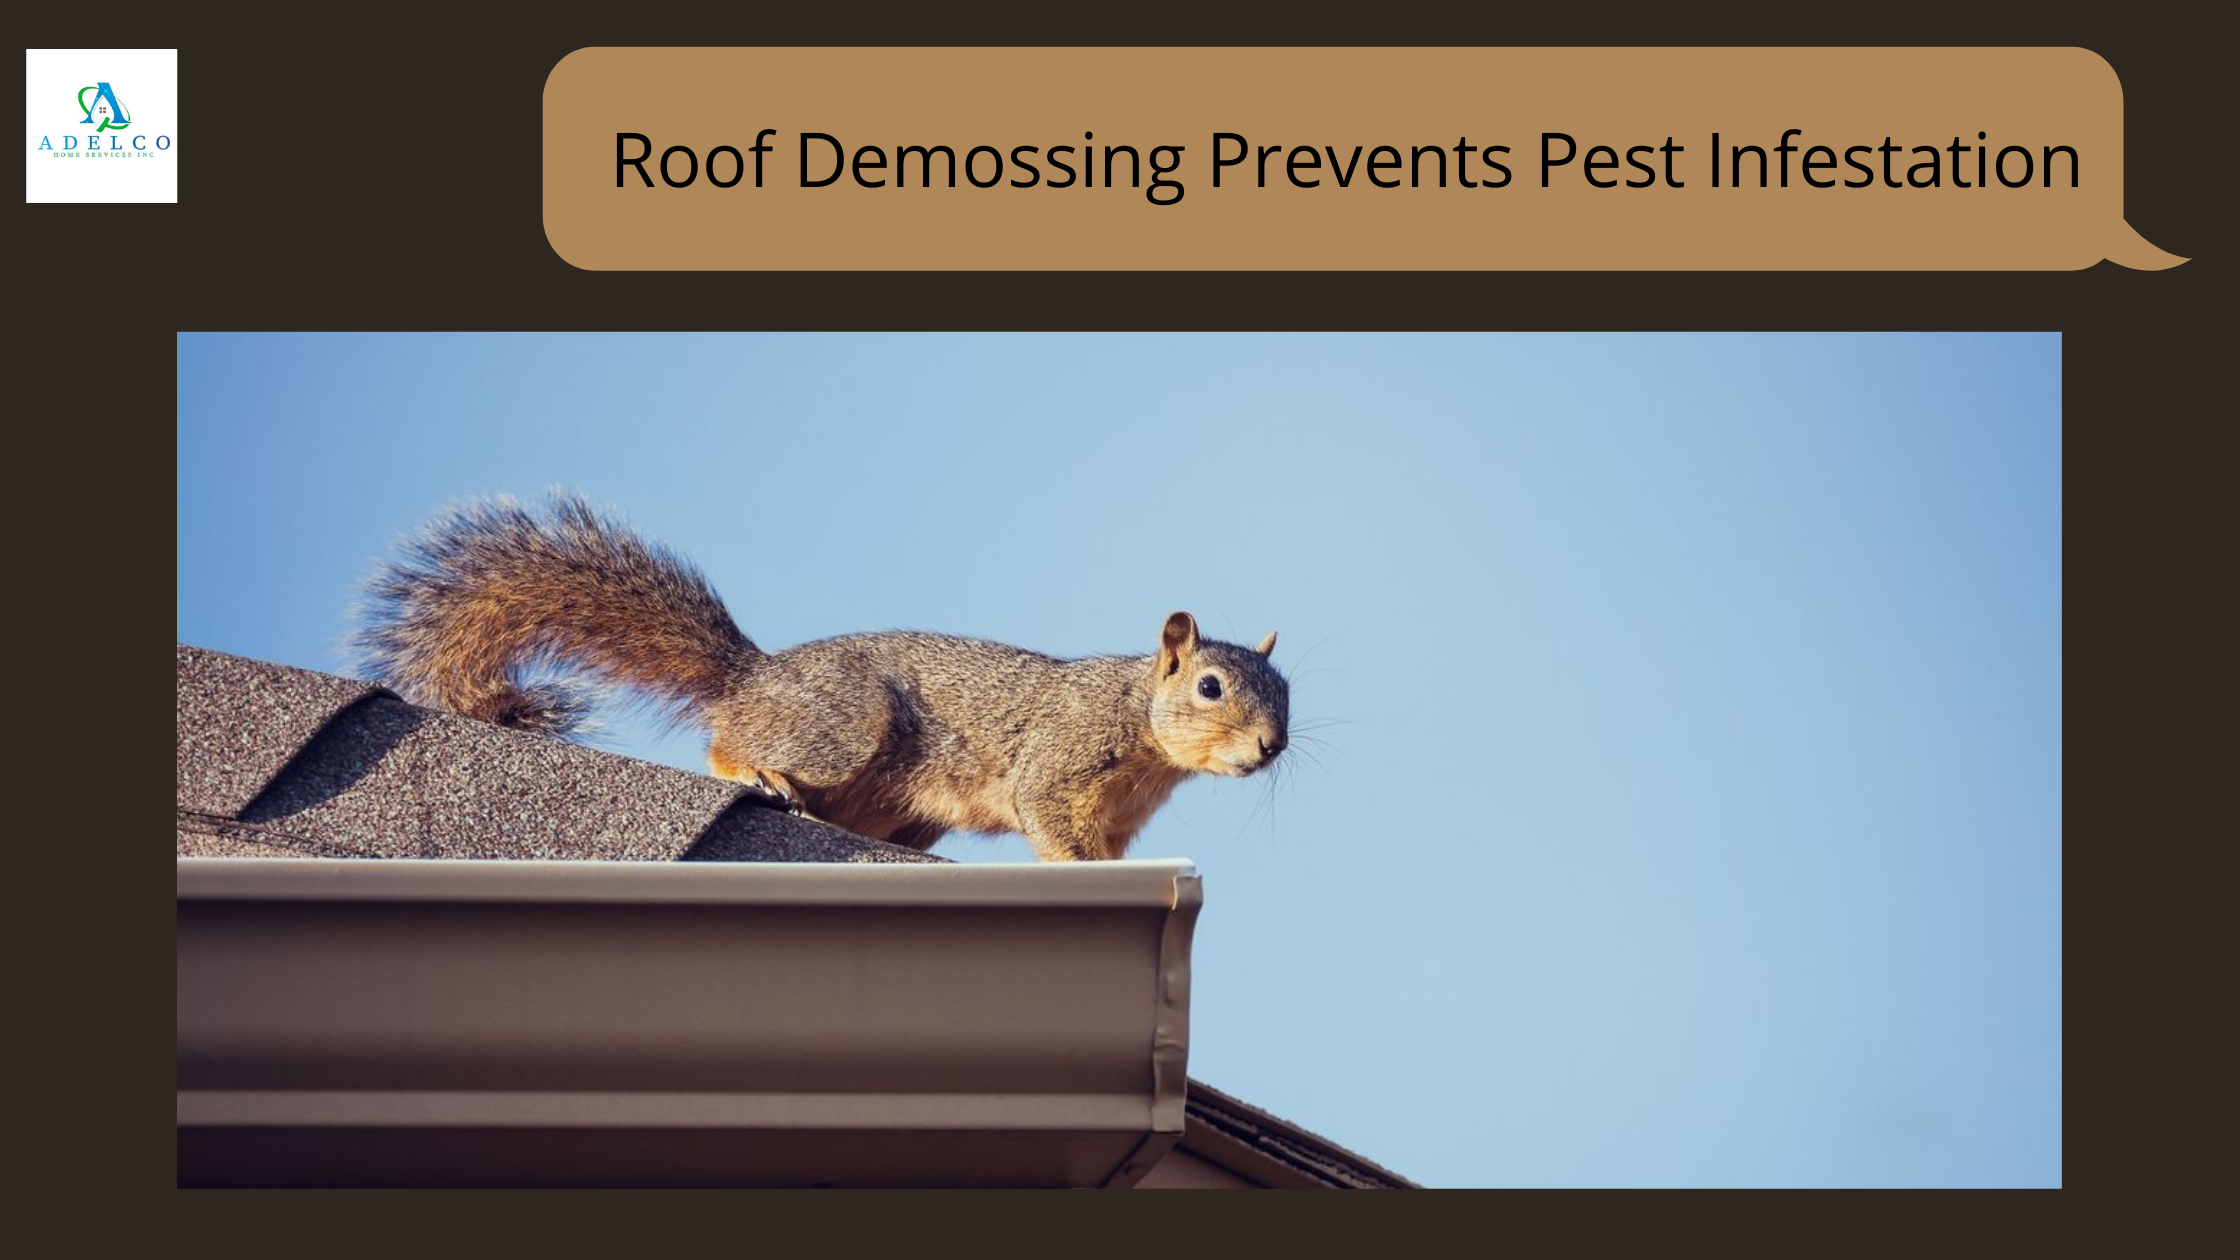 Roof Demossing Prevents Pest Infestation